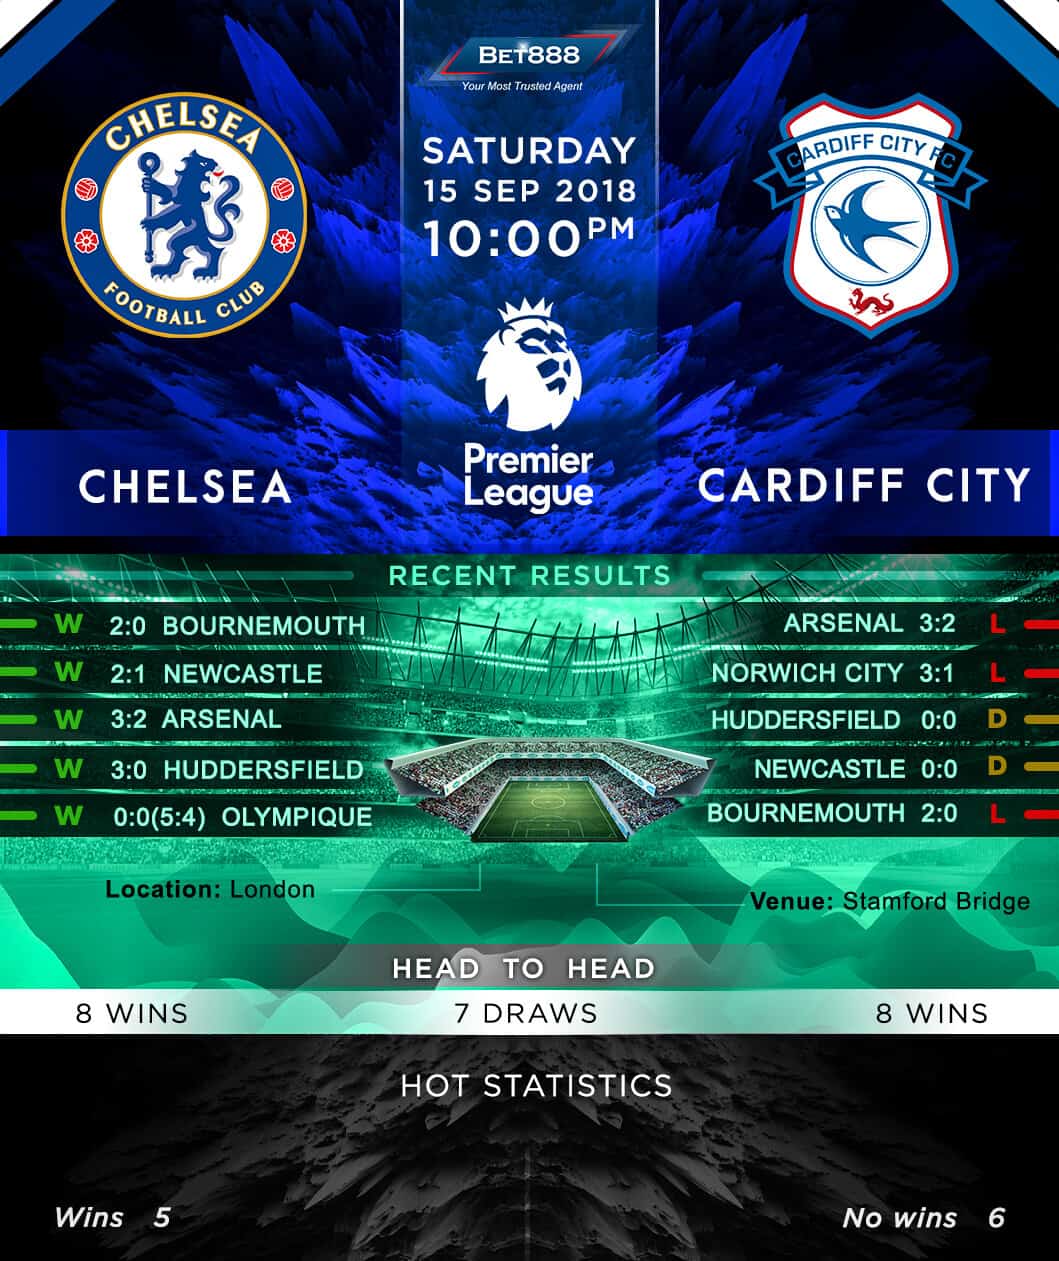 Chelsea vs Cardiff City 15/09/18